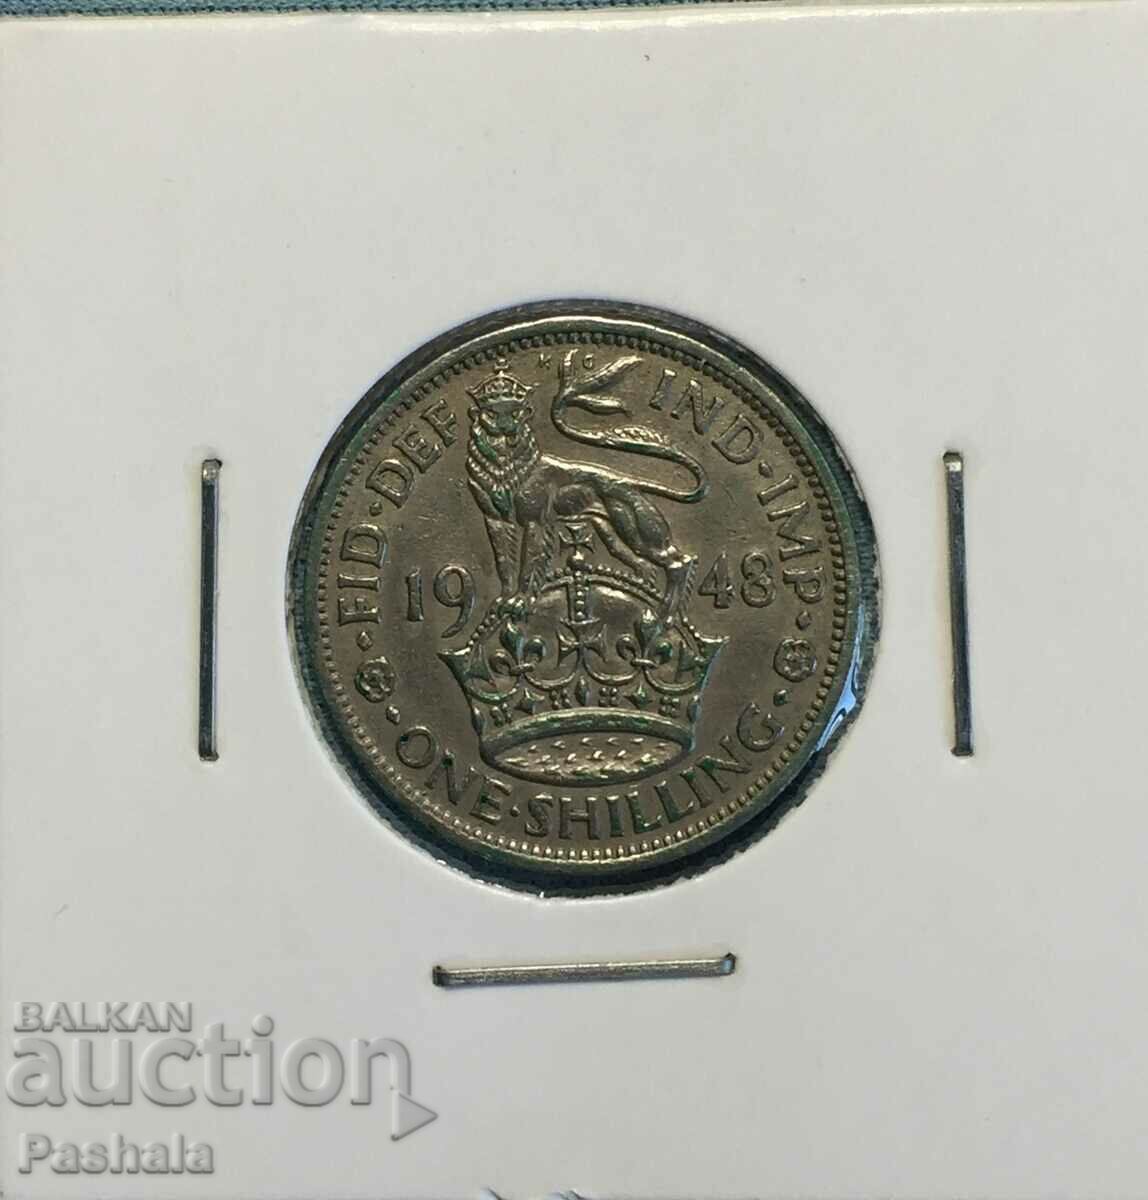 Great Britain 1 shilling 1948